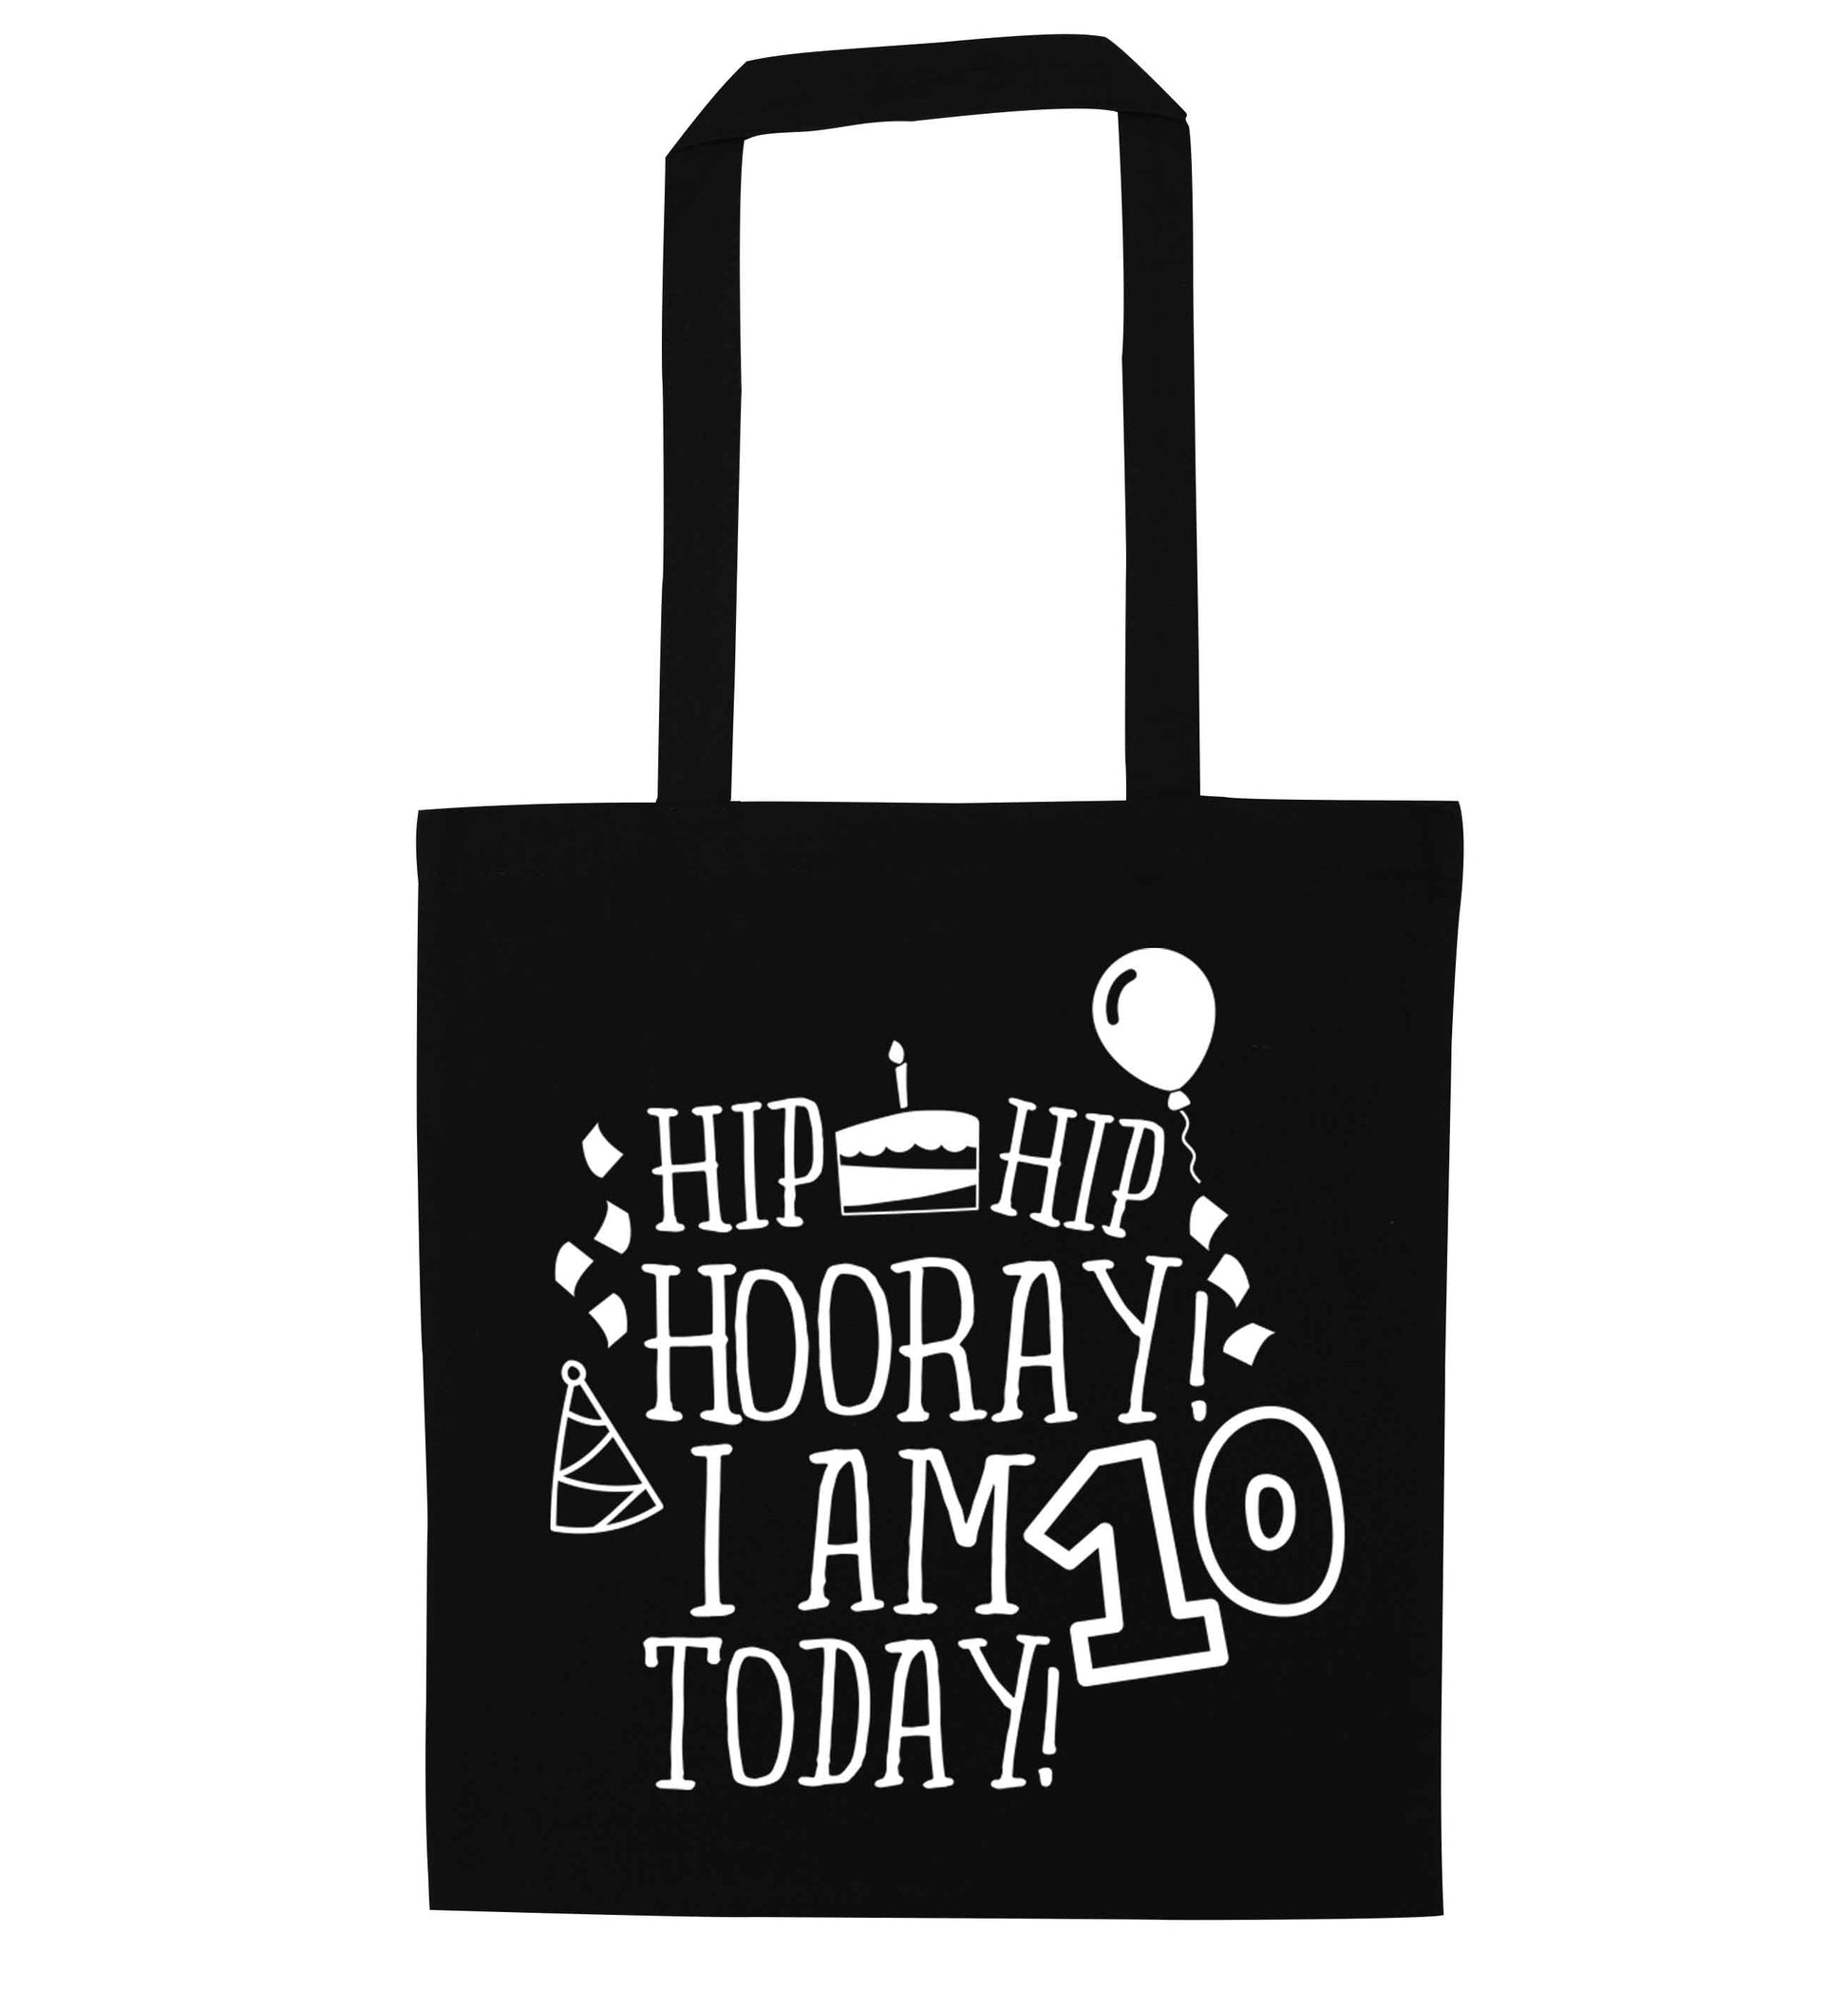 Hip hip hooray I am ten today! black tote bag